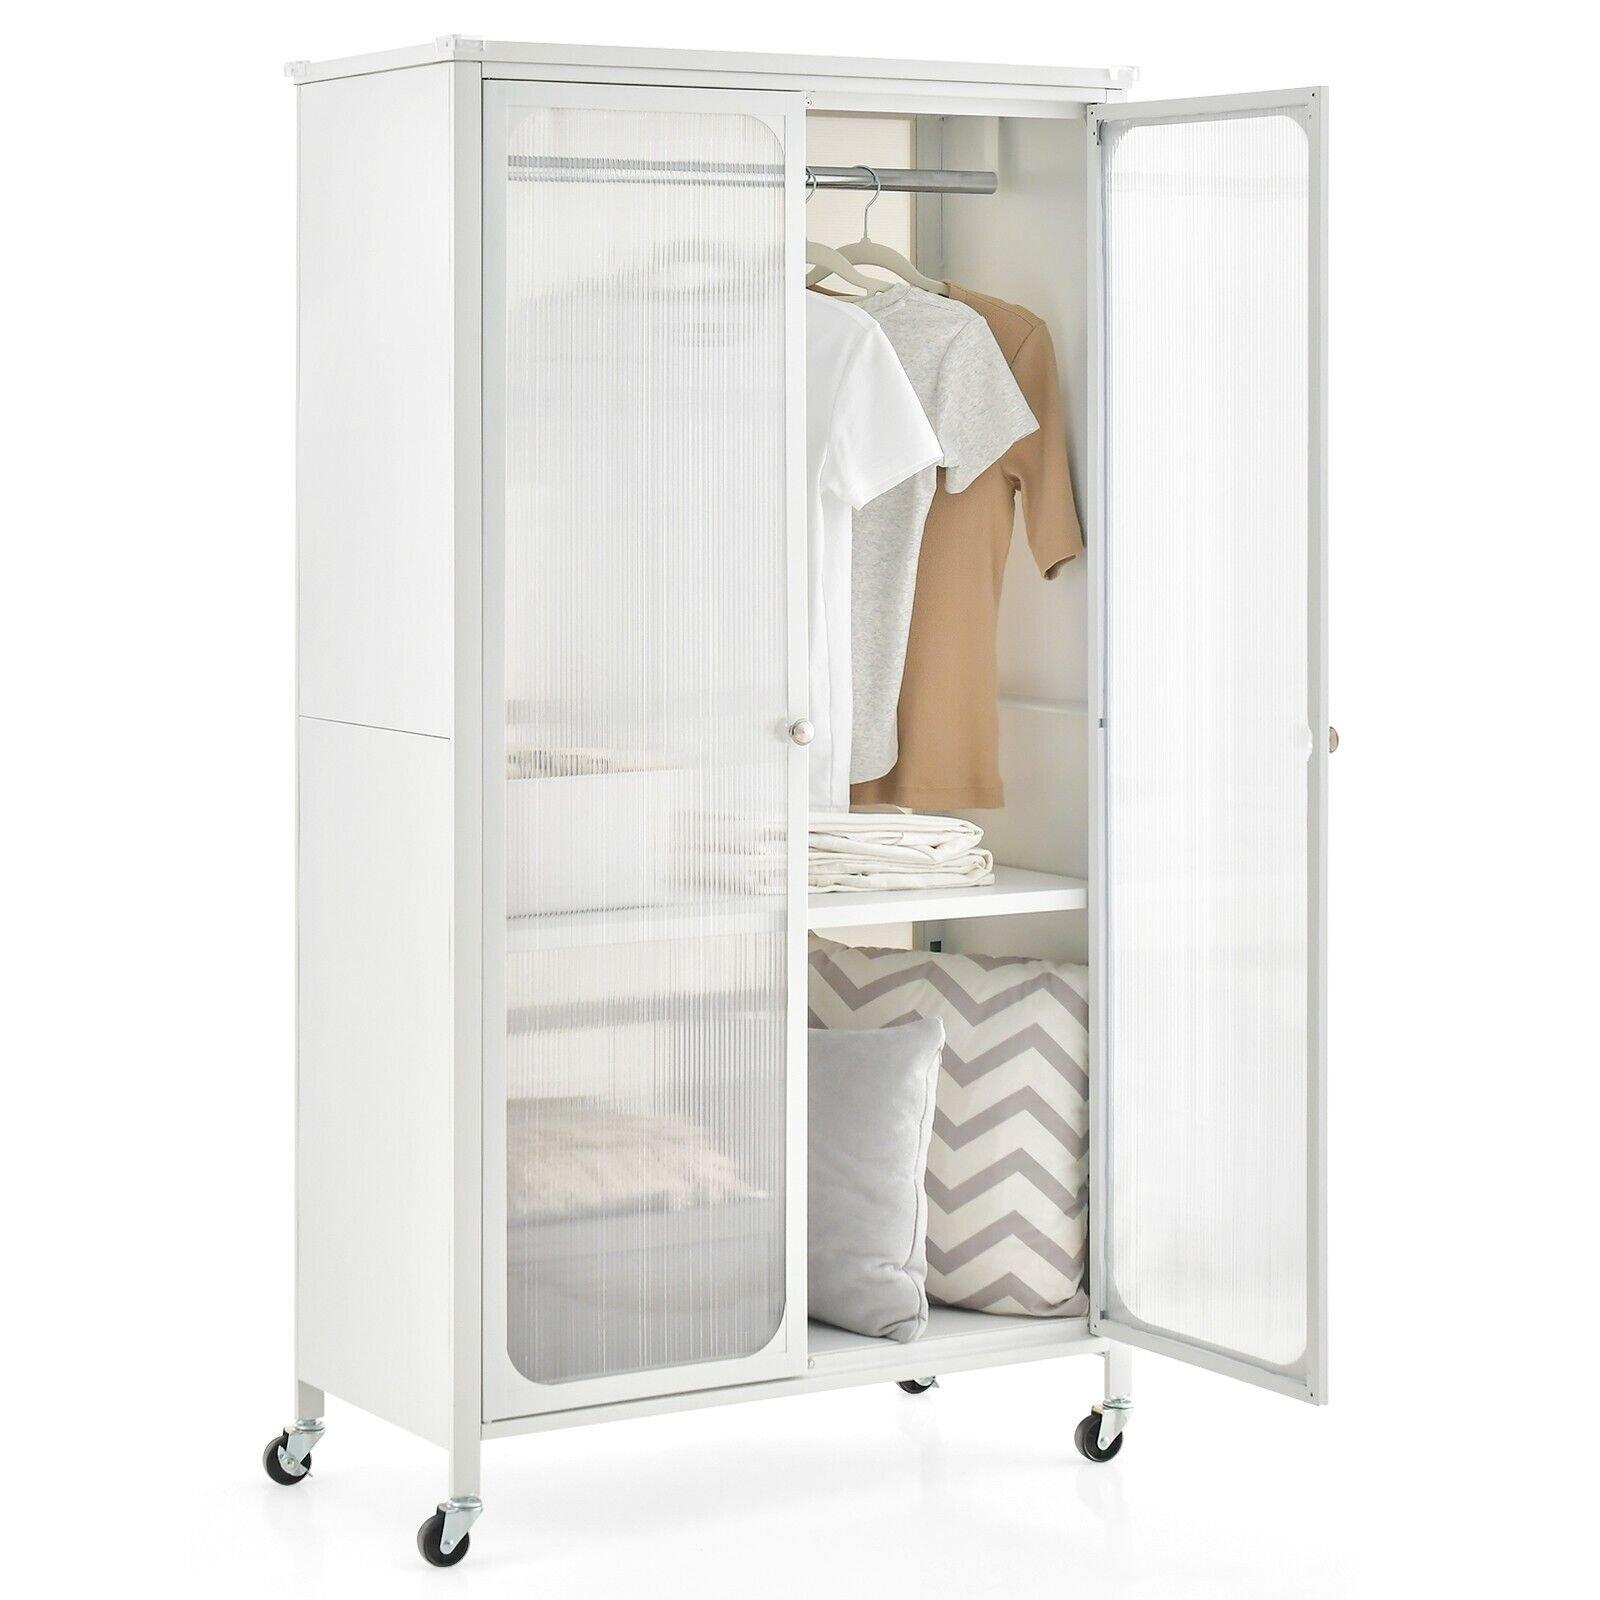 Rolling Storage Wardrobe Cabinet Mobile Wardrobe Armoire Closet w/ Hanging Rod